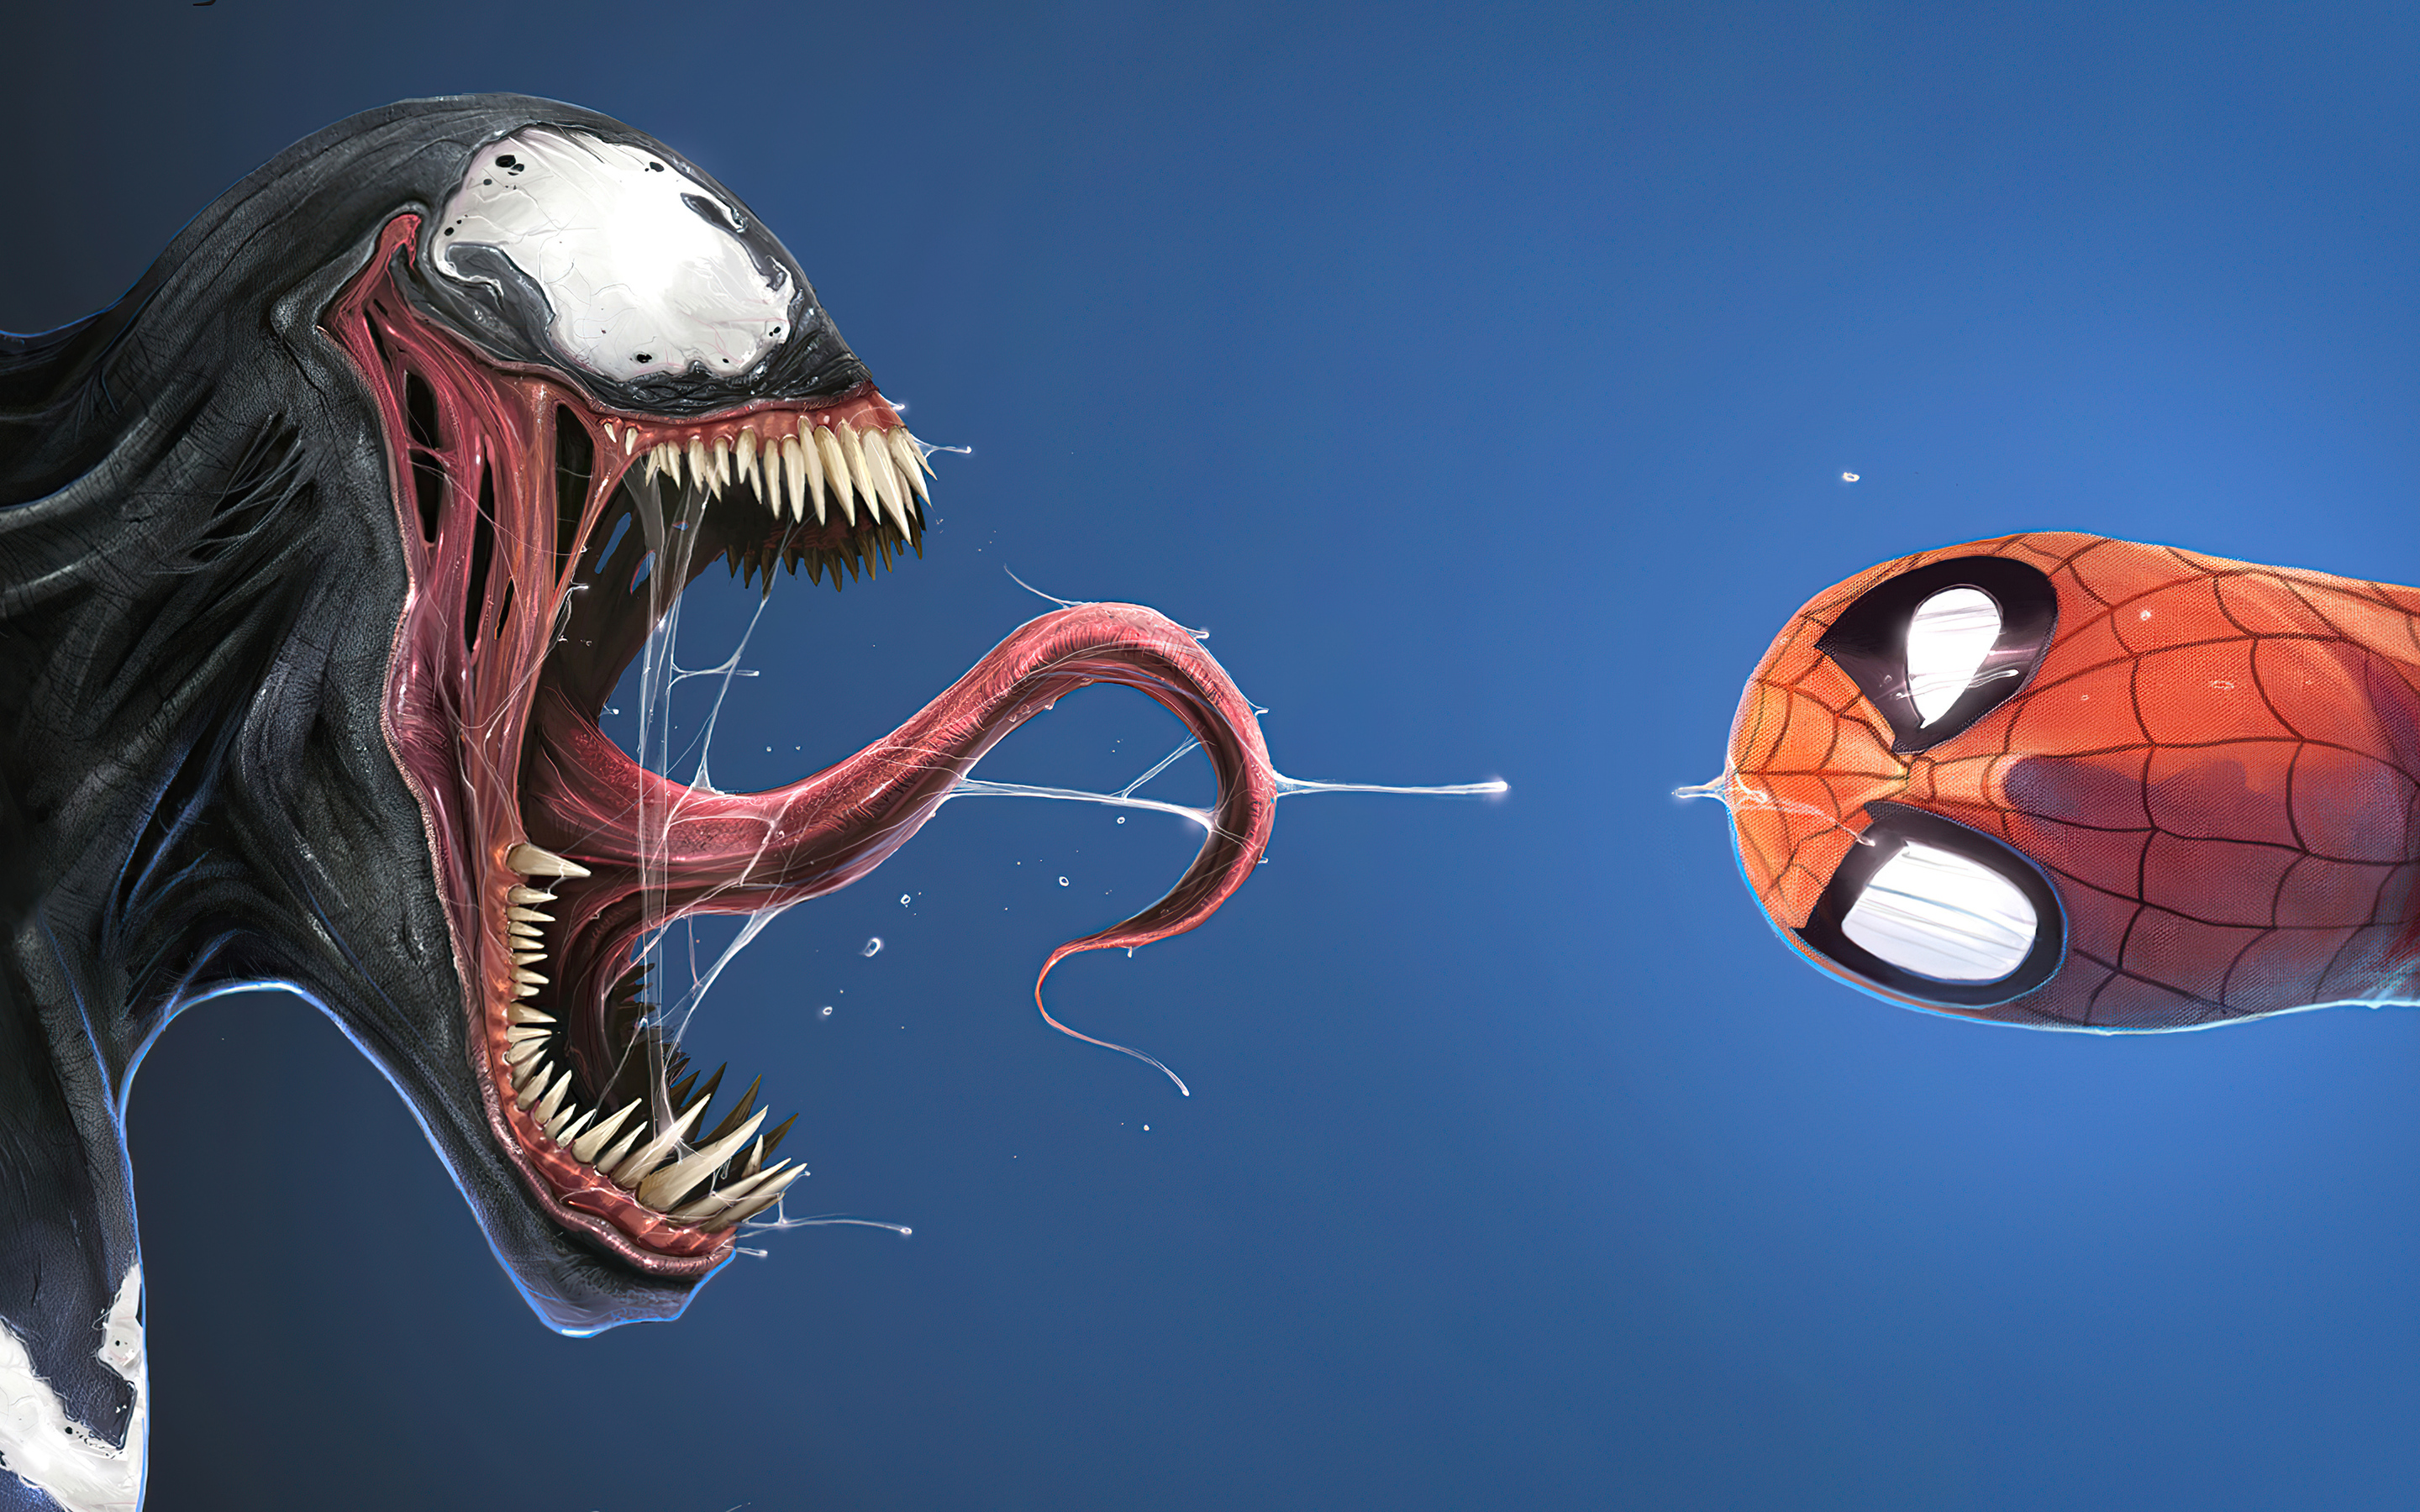 Spider Venom Funny 4k Macbook Pro Retina HD 4k Wallpaper, Image, Background, Photo and Picture